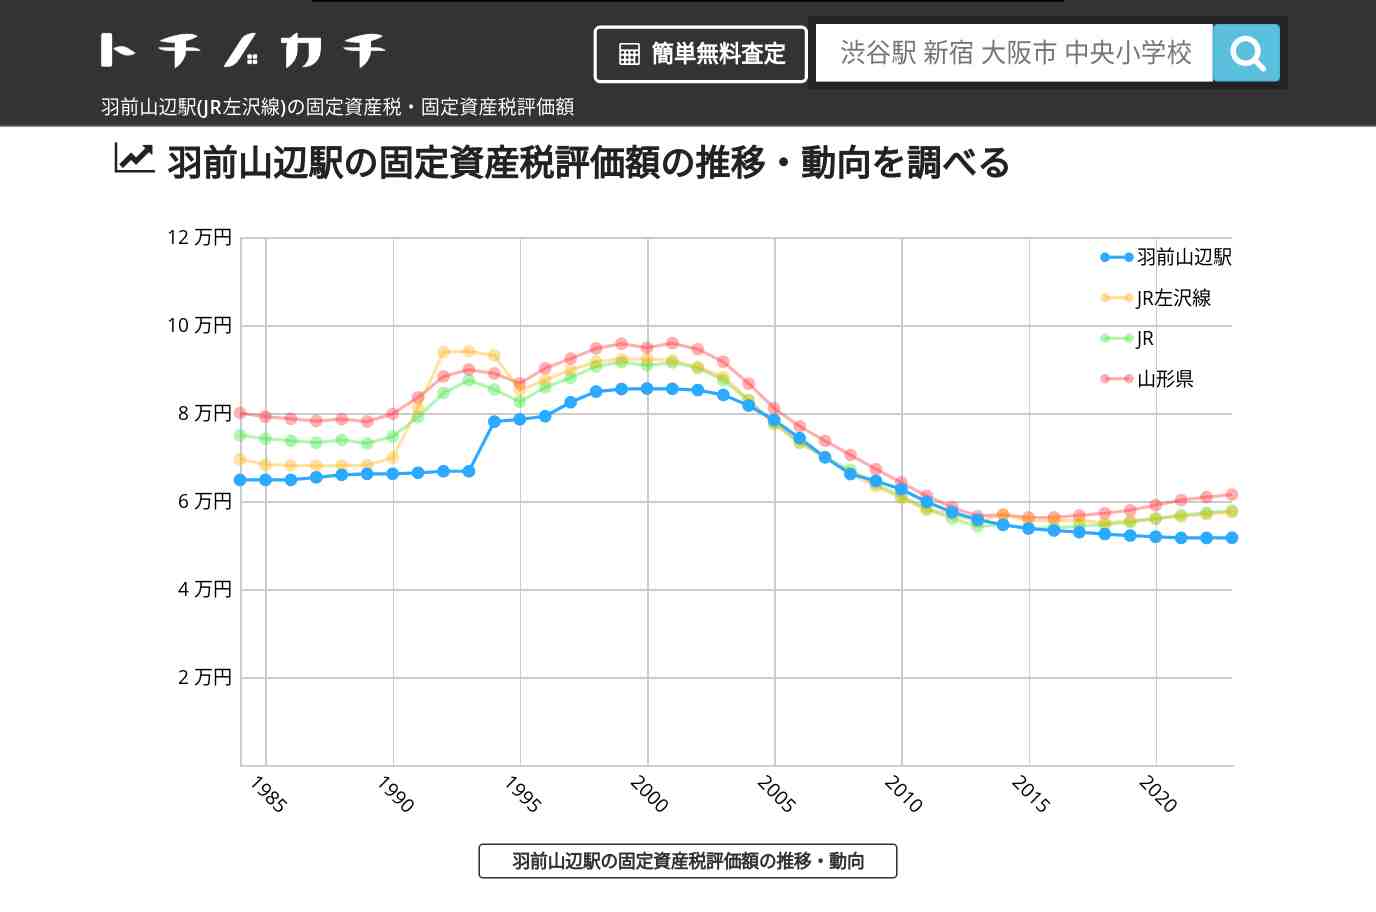 羽前山辺駅(JR左沢線)の固定資産税・固定資産税評価額 | トチノカチ